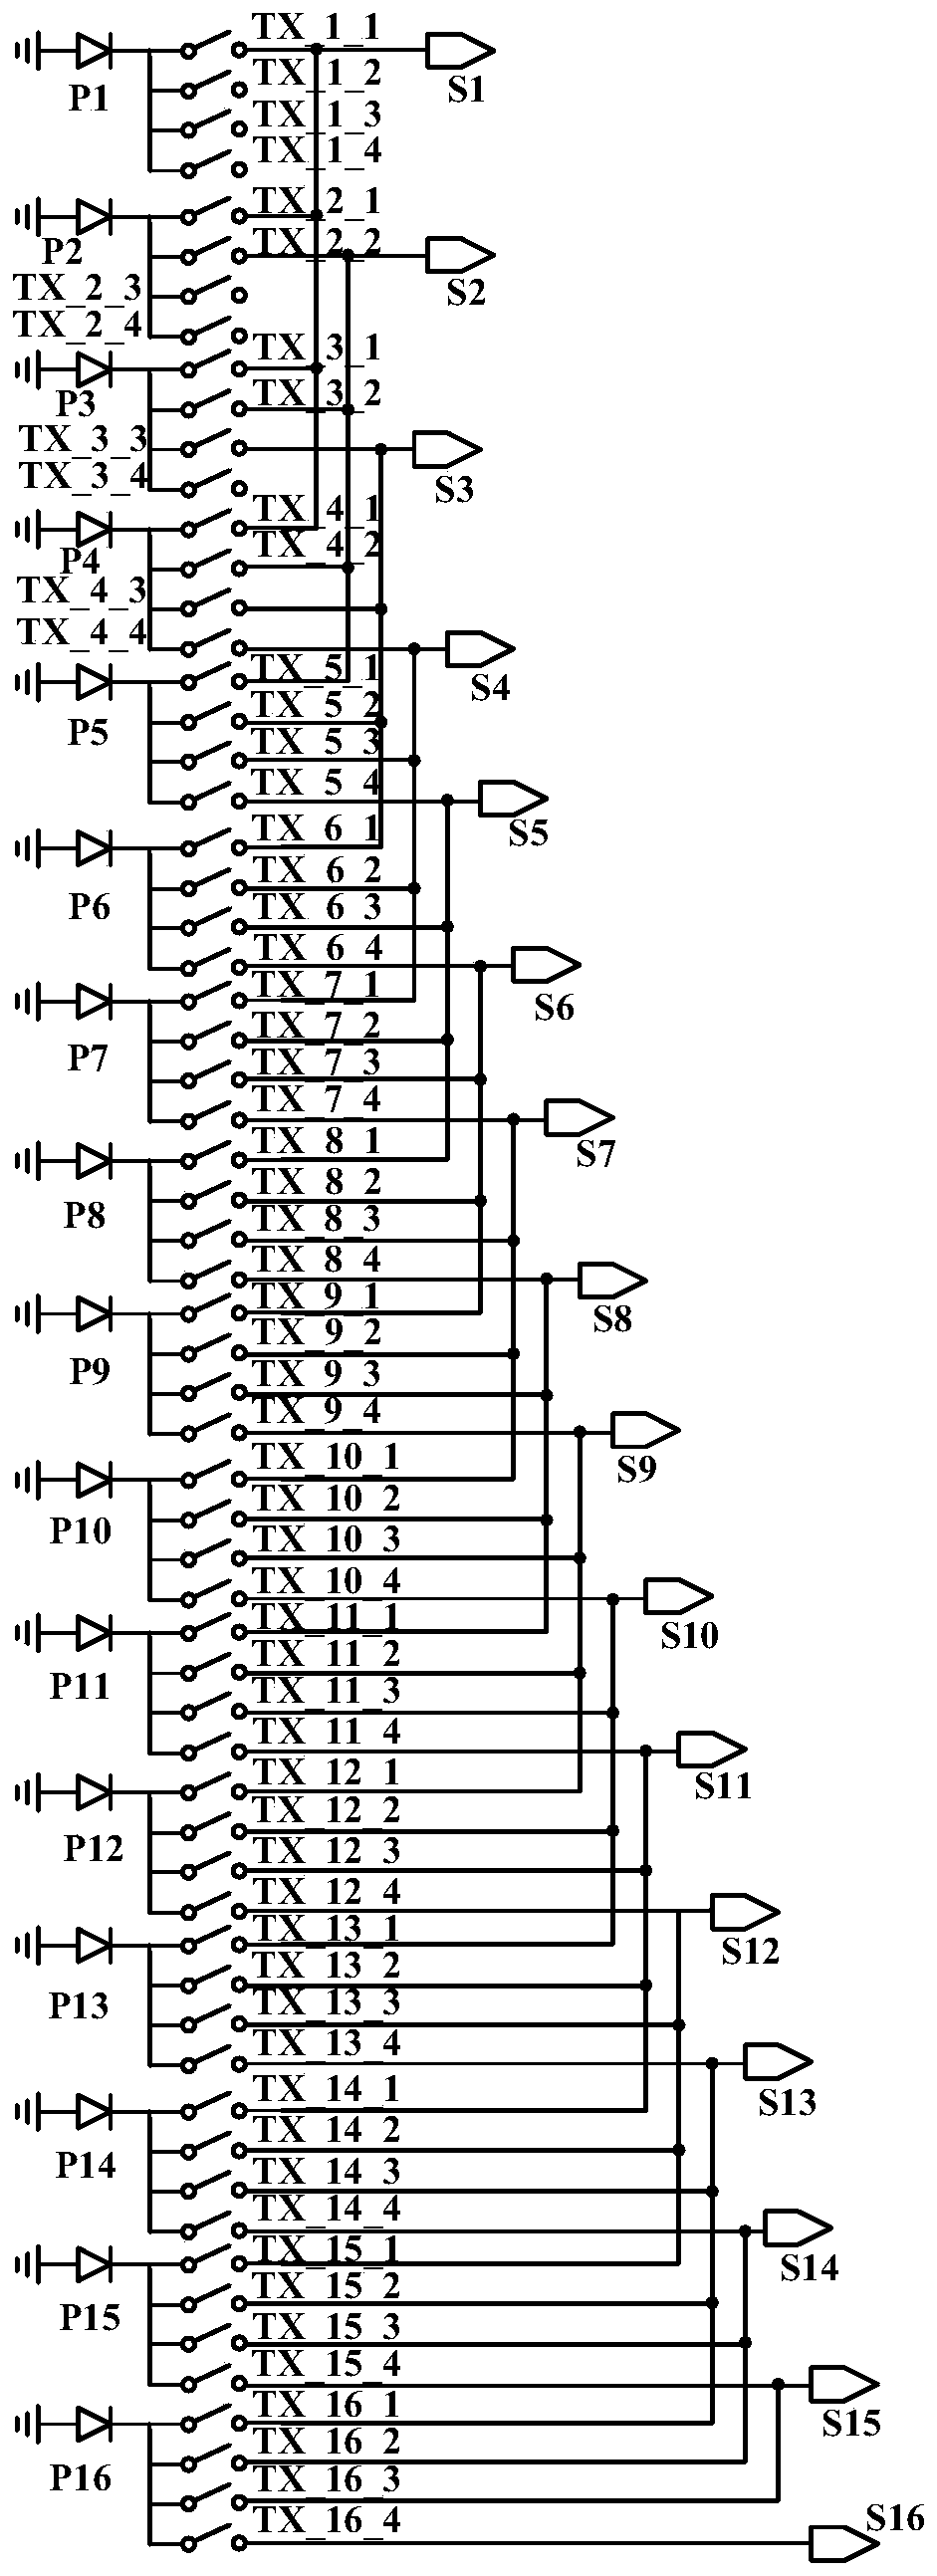 Pixel structure of a high light sensitivity CMOS image sensor